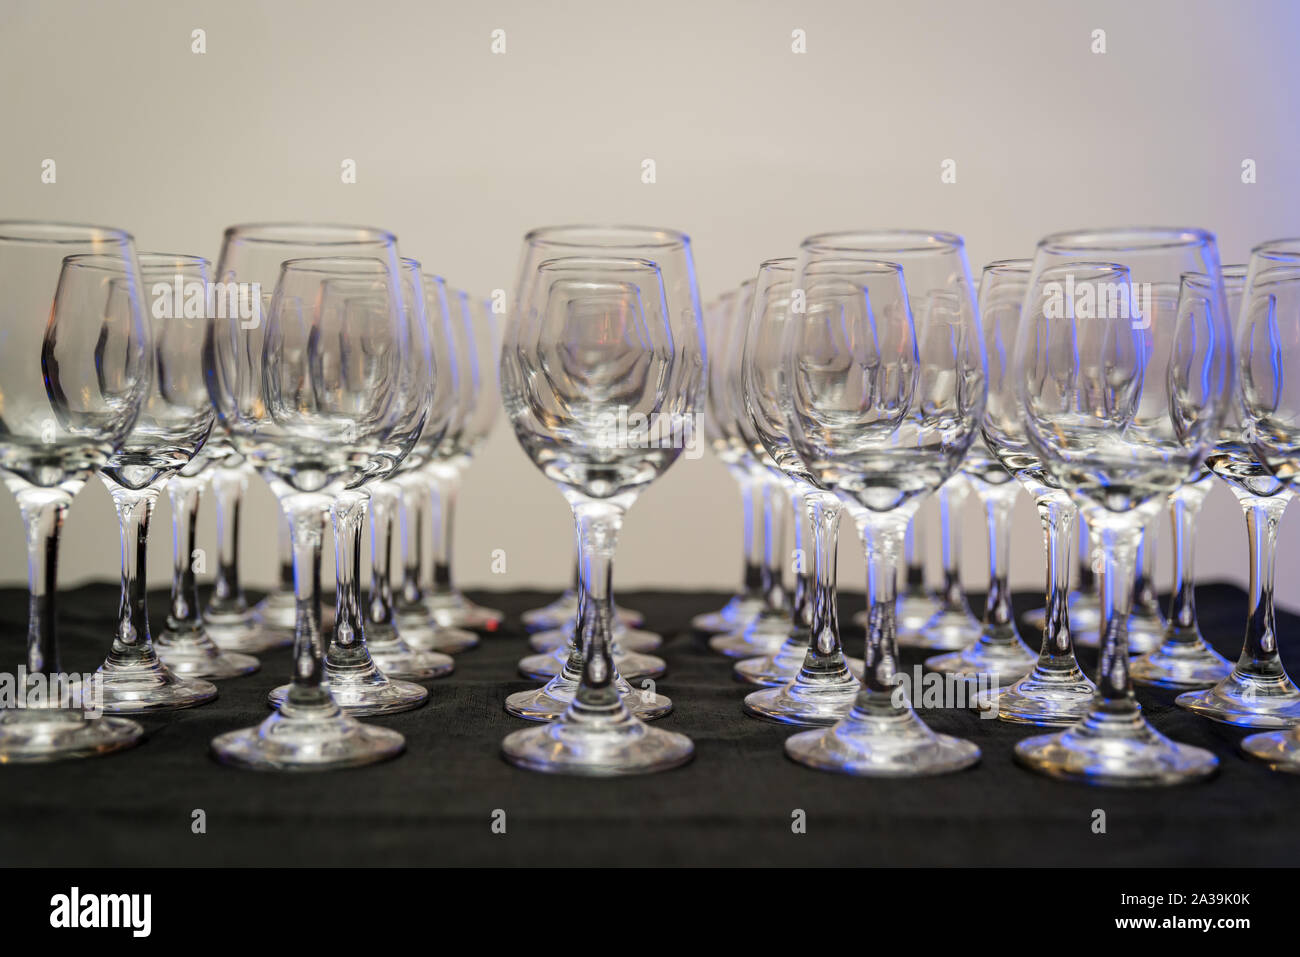 Rows of wine glasses Stock Photo